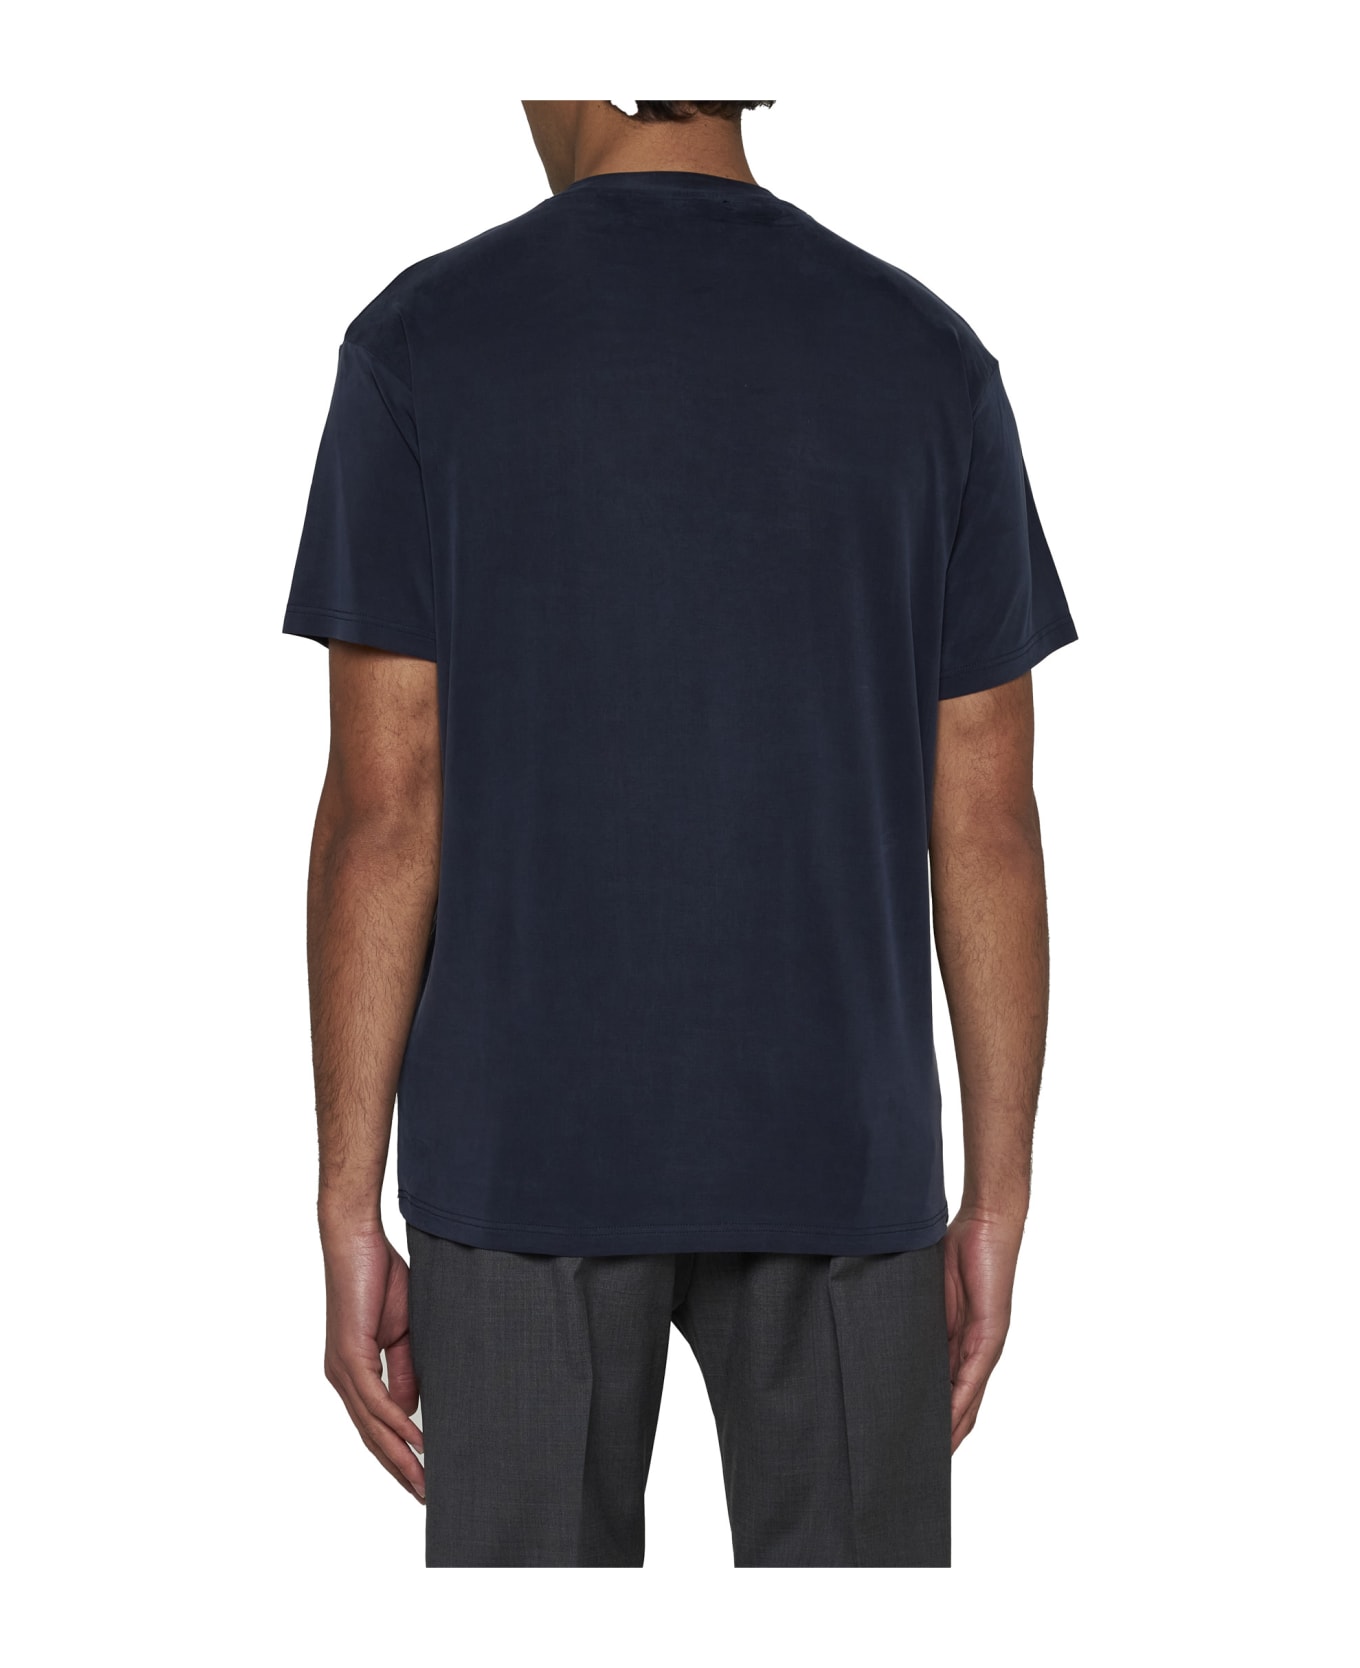 Low Brand T-Shirt - Blue シャツ